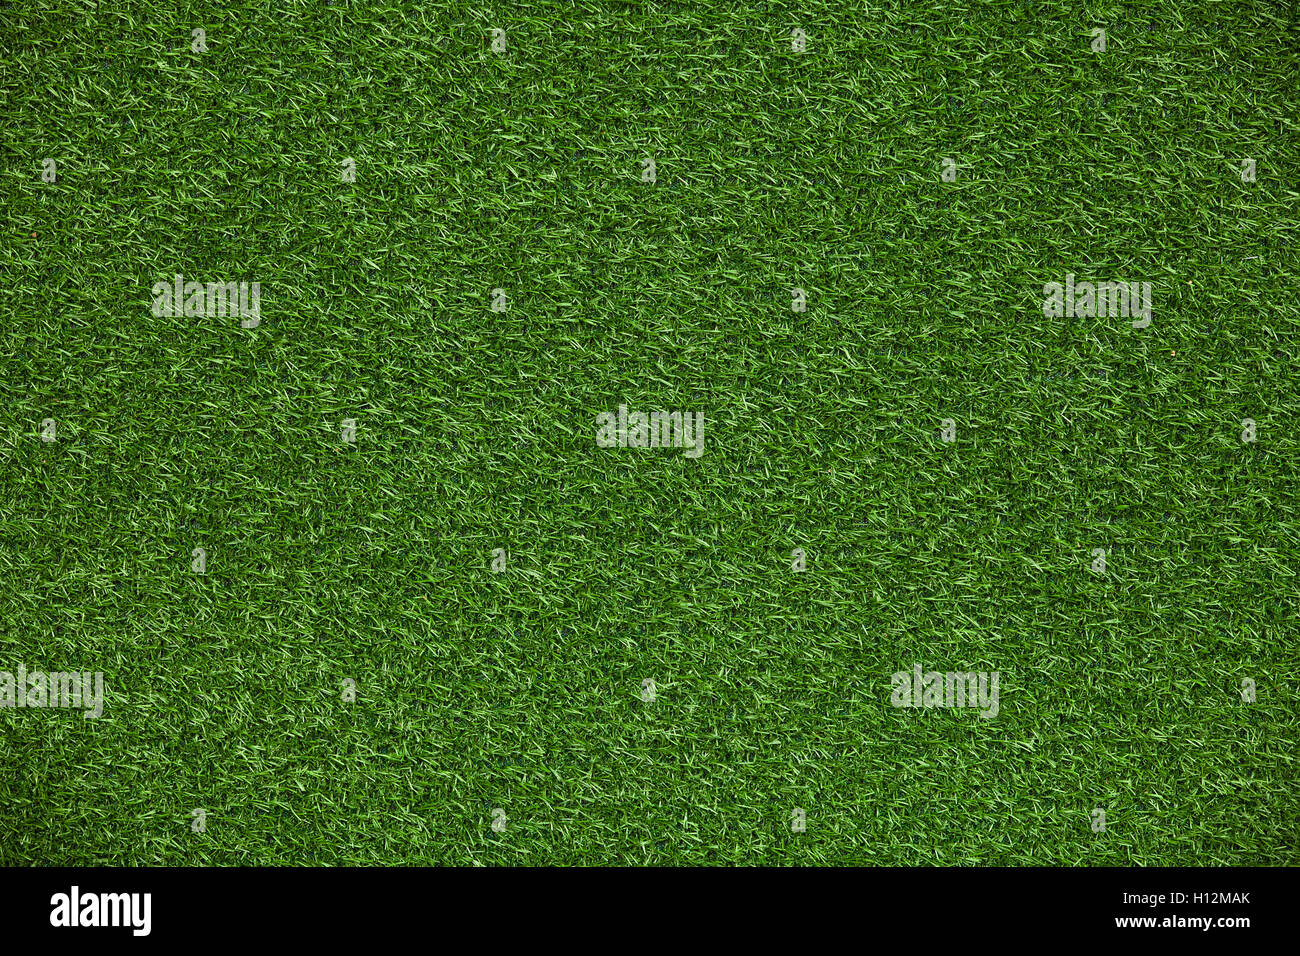 Green grass lawn Stock Photo